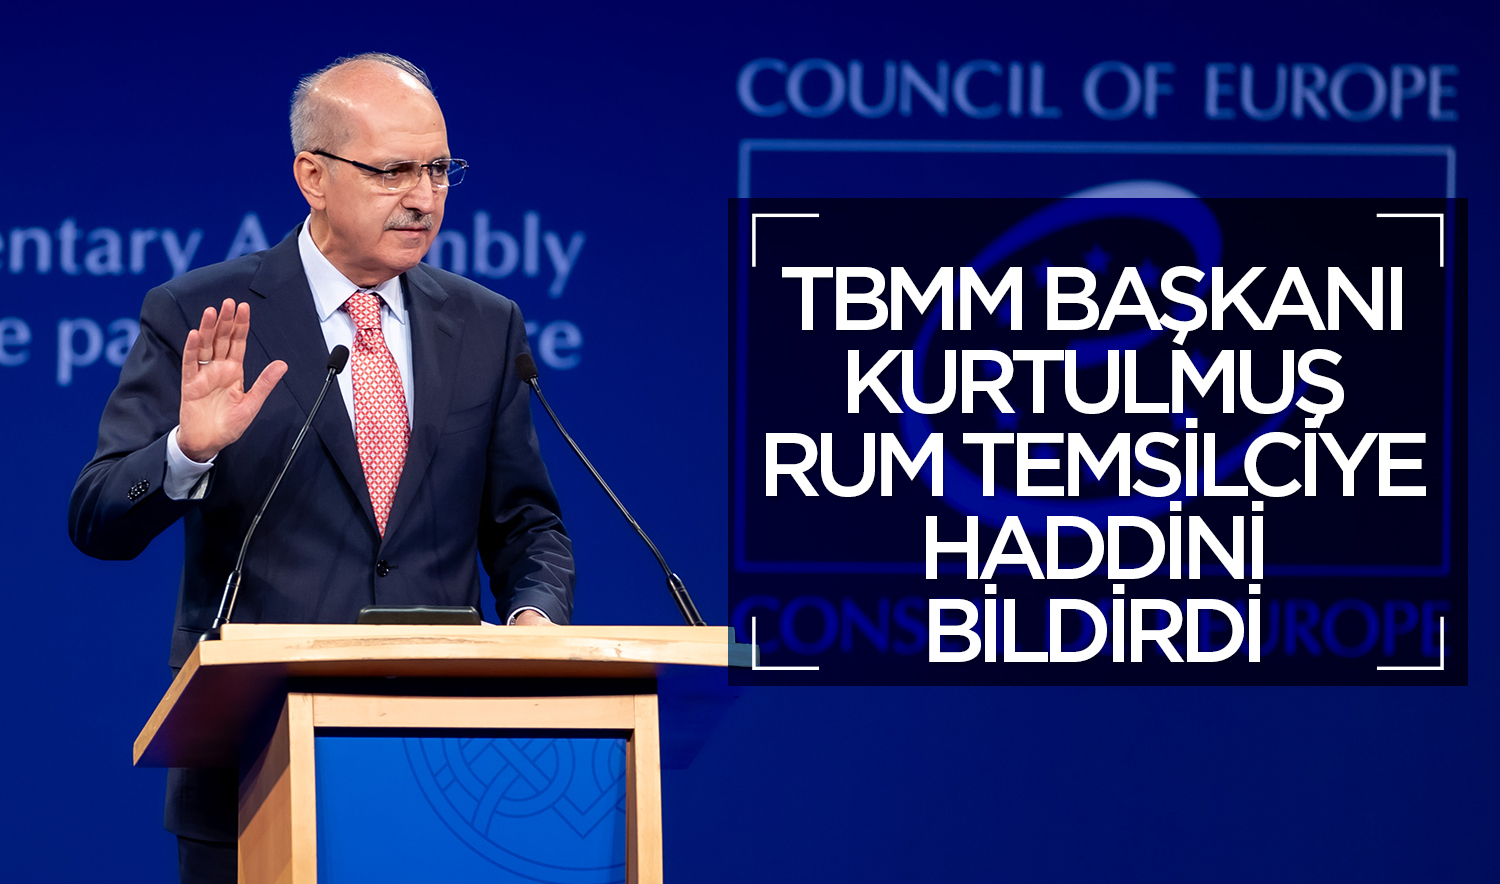 TBMM Başkanı Kurtulmuş Rum temsilciye haddini bildirdi